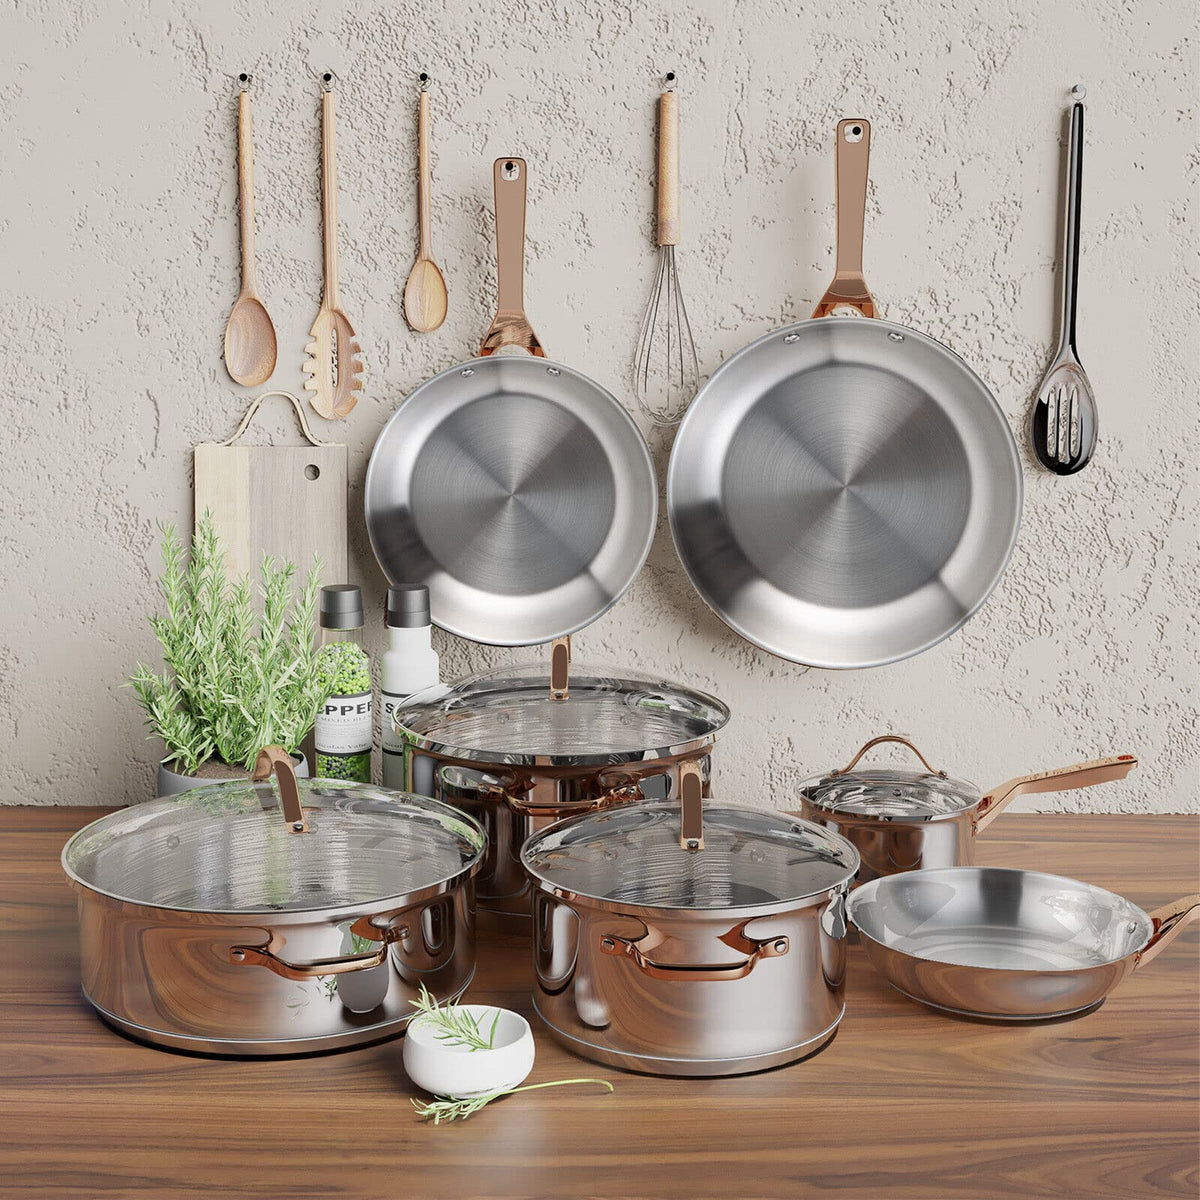 Giantex 11-Piece Kitchen Cookware Set, Professional Pots and Pans